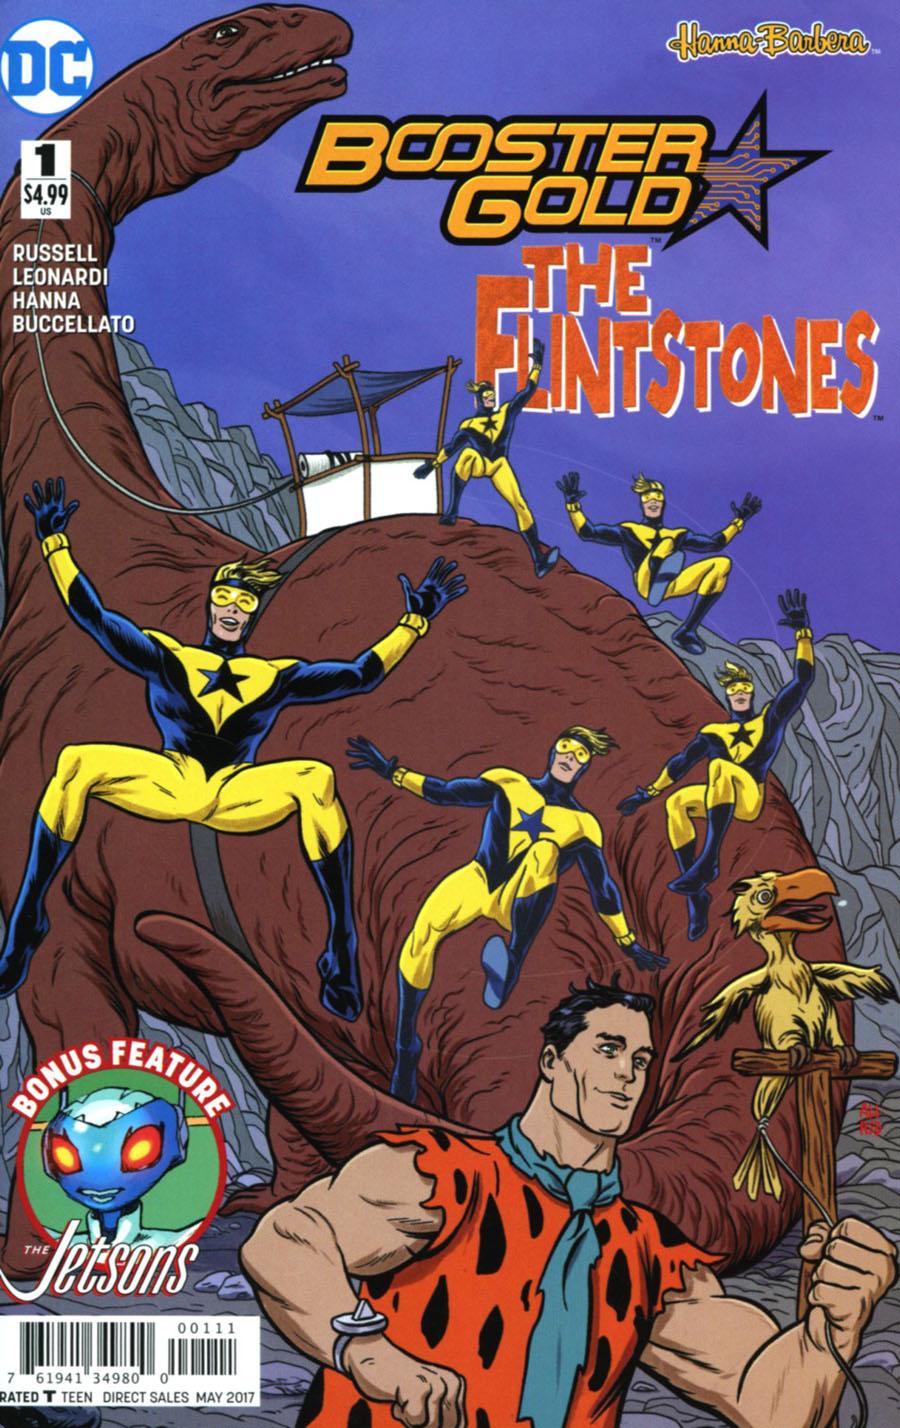 Booster Gold Flintstones Special Vol. 1 #1